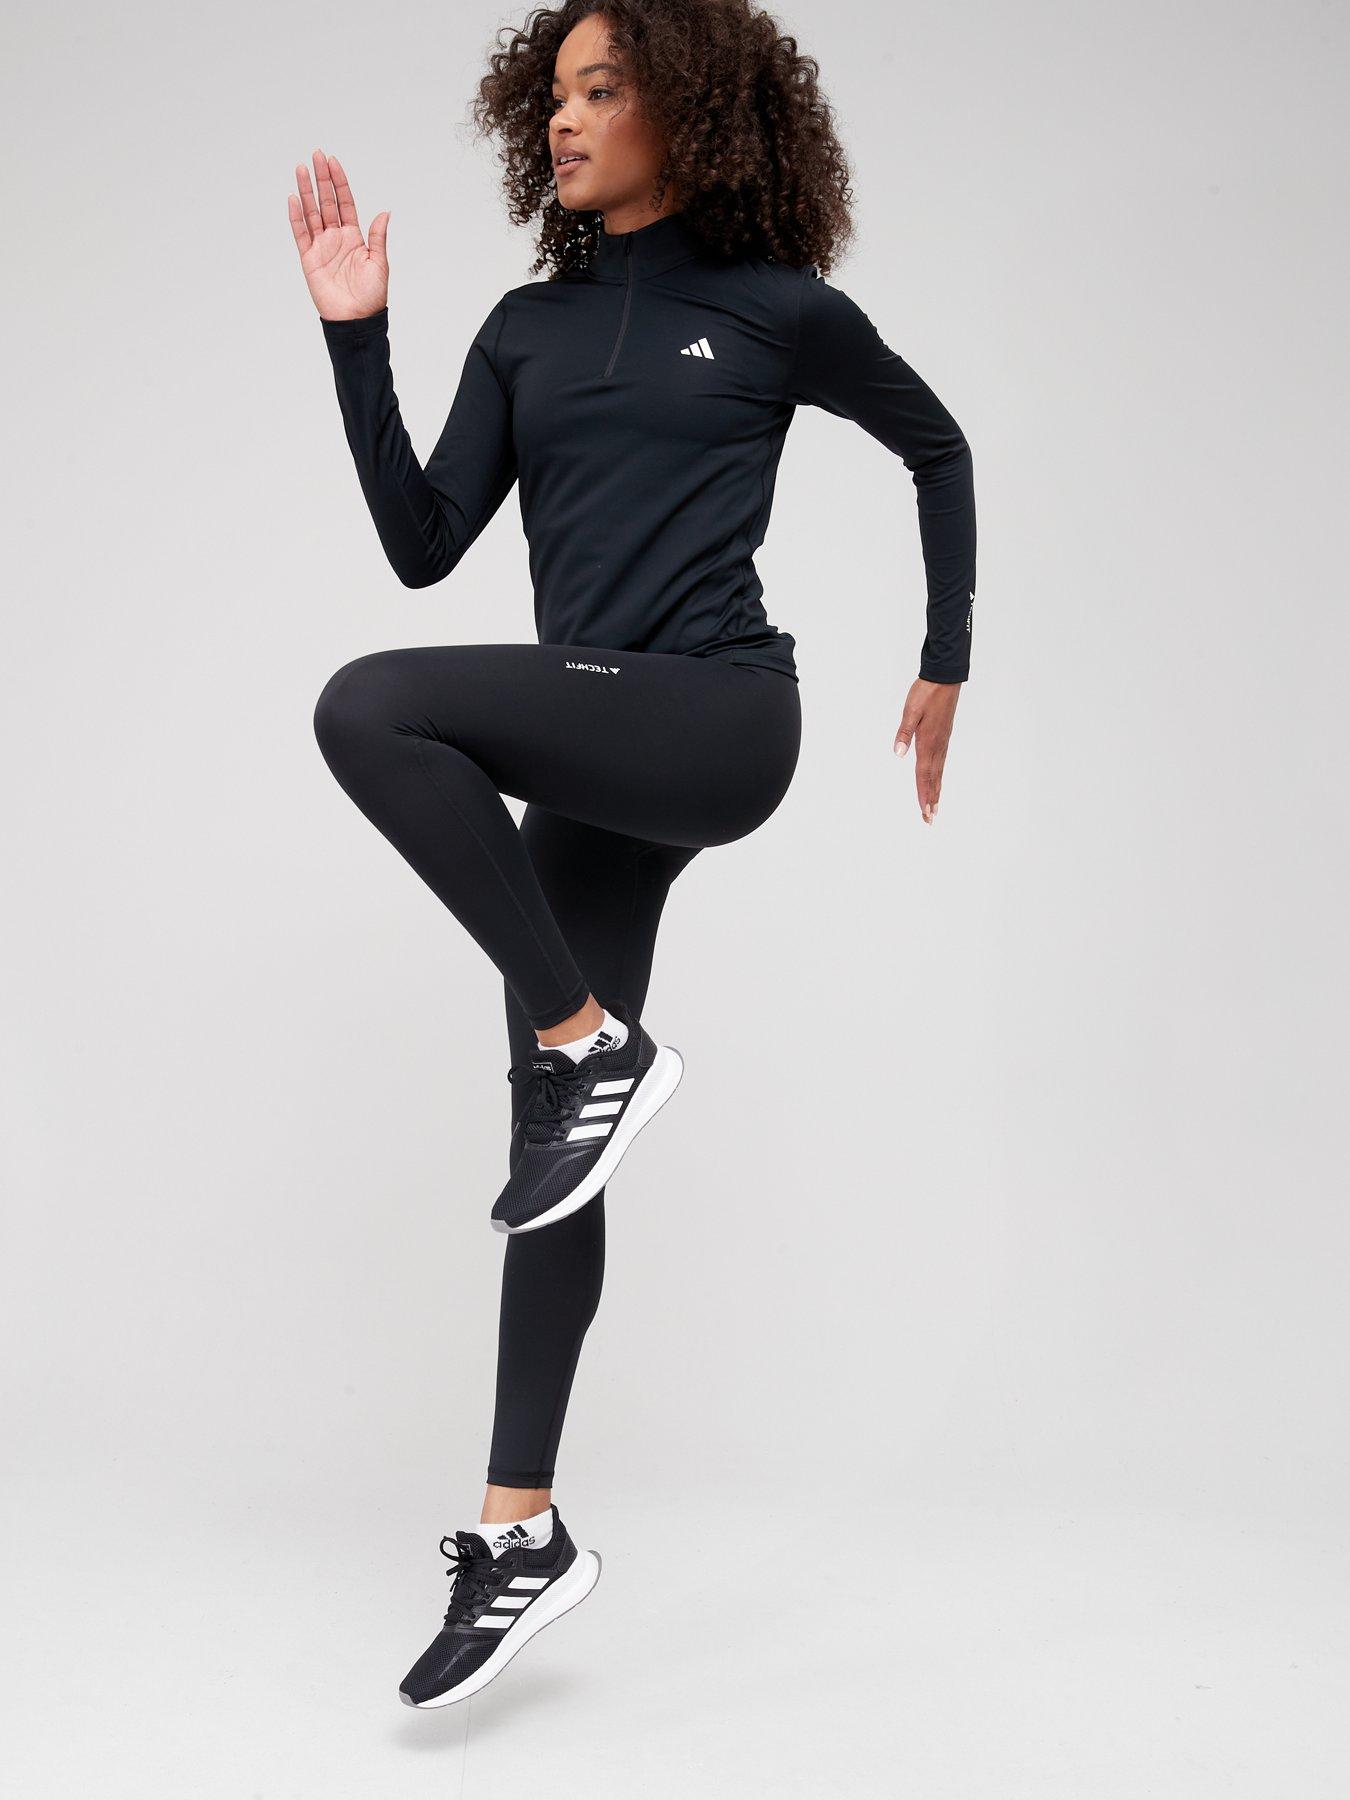 Women's Yoga Power Mesh 7/8 Tight, adidas